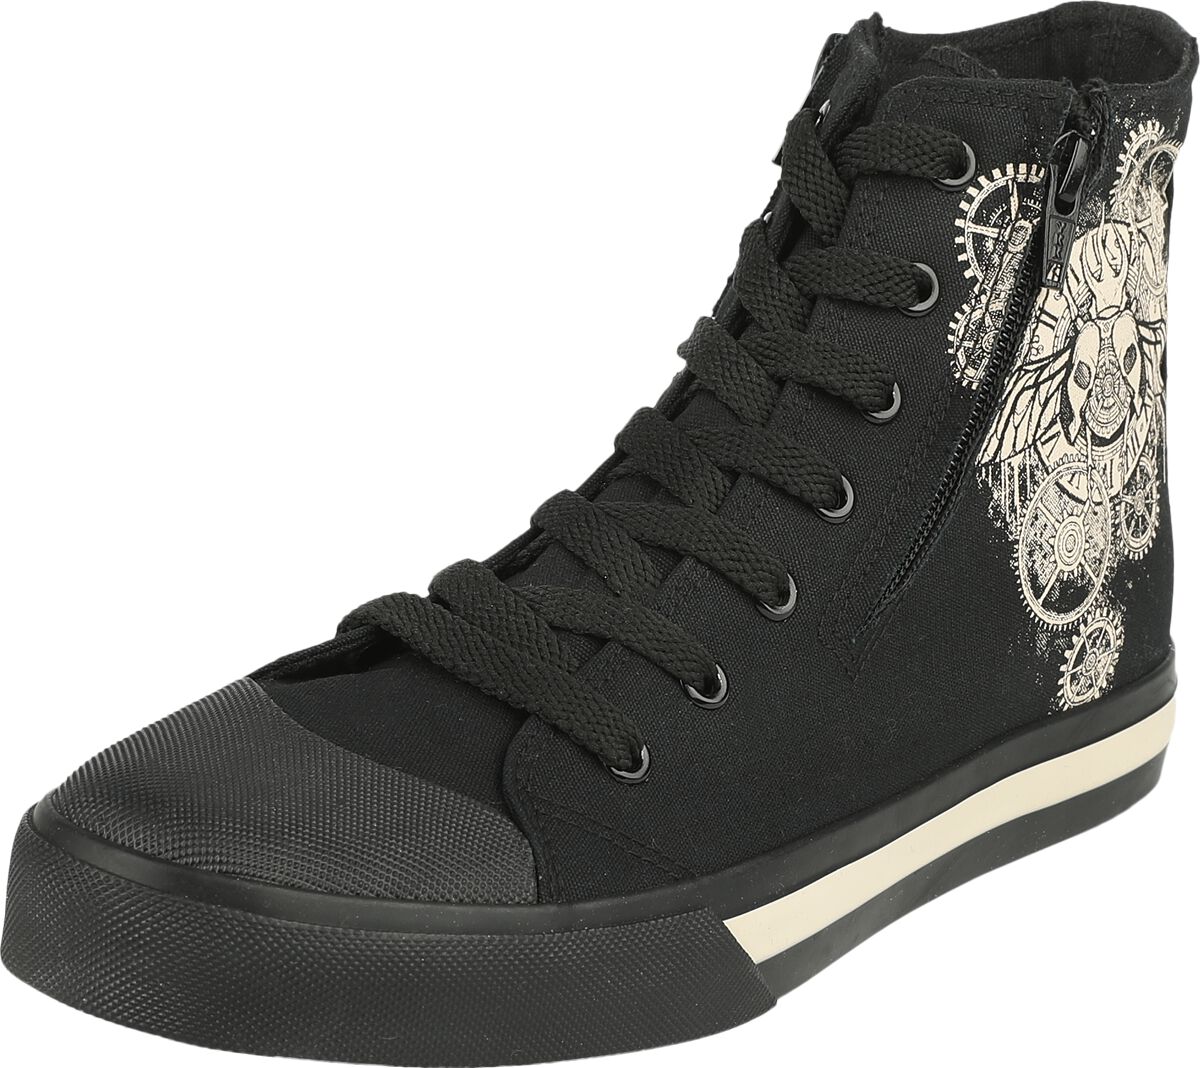 Gothicana by EMP - Gothic Sneaker high - Sneaker with Industrial Beetle Print - EU37 bis EU46 - Größe EU38 - schwarz